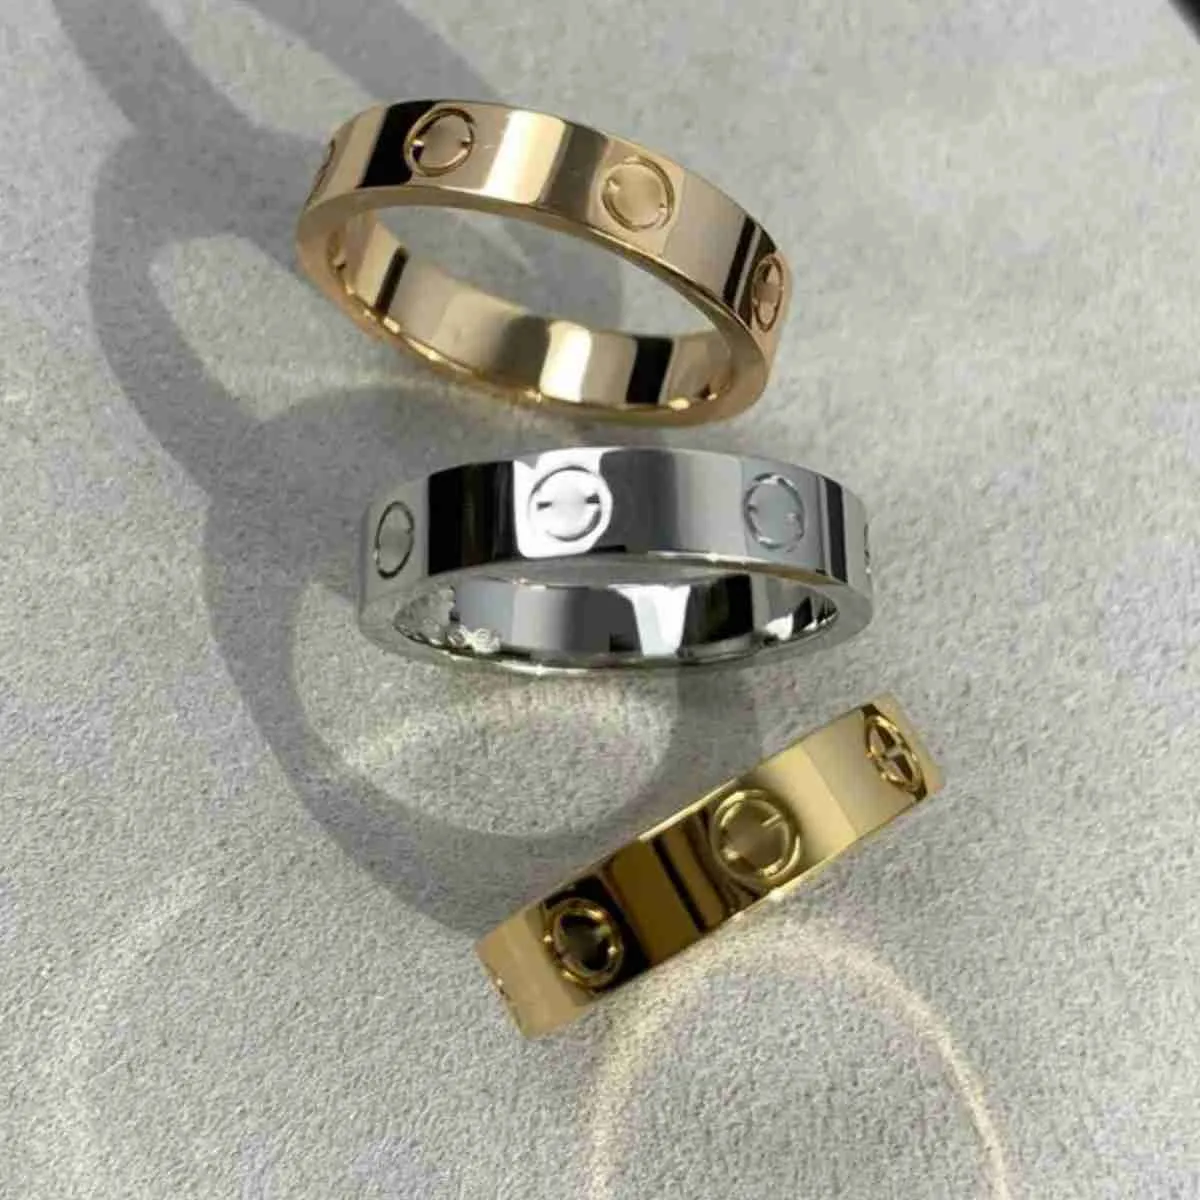 As Original Designer Engrave 6mm Diamond Love Ring 18k Gold Silver Rose 750 Stainless Steel Rings Women Men Lovers Wedding Jewelry Gift Big Usa Size 6 7 8 9 10 11 12 UZCN